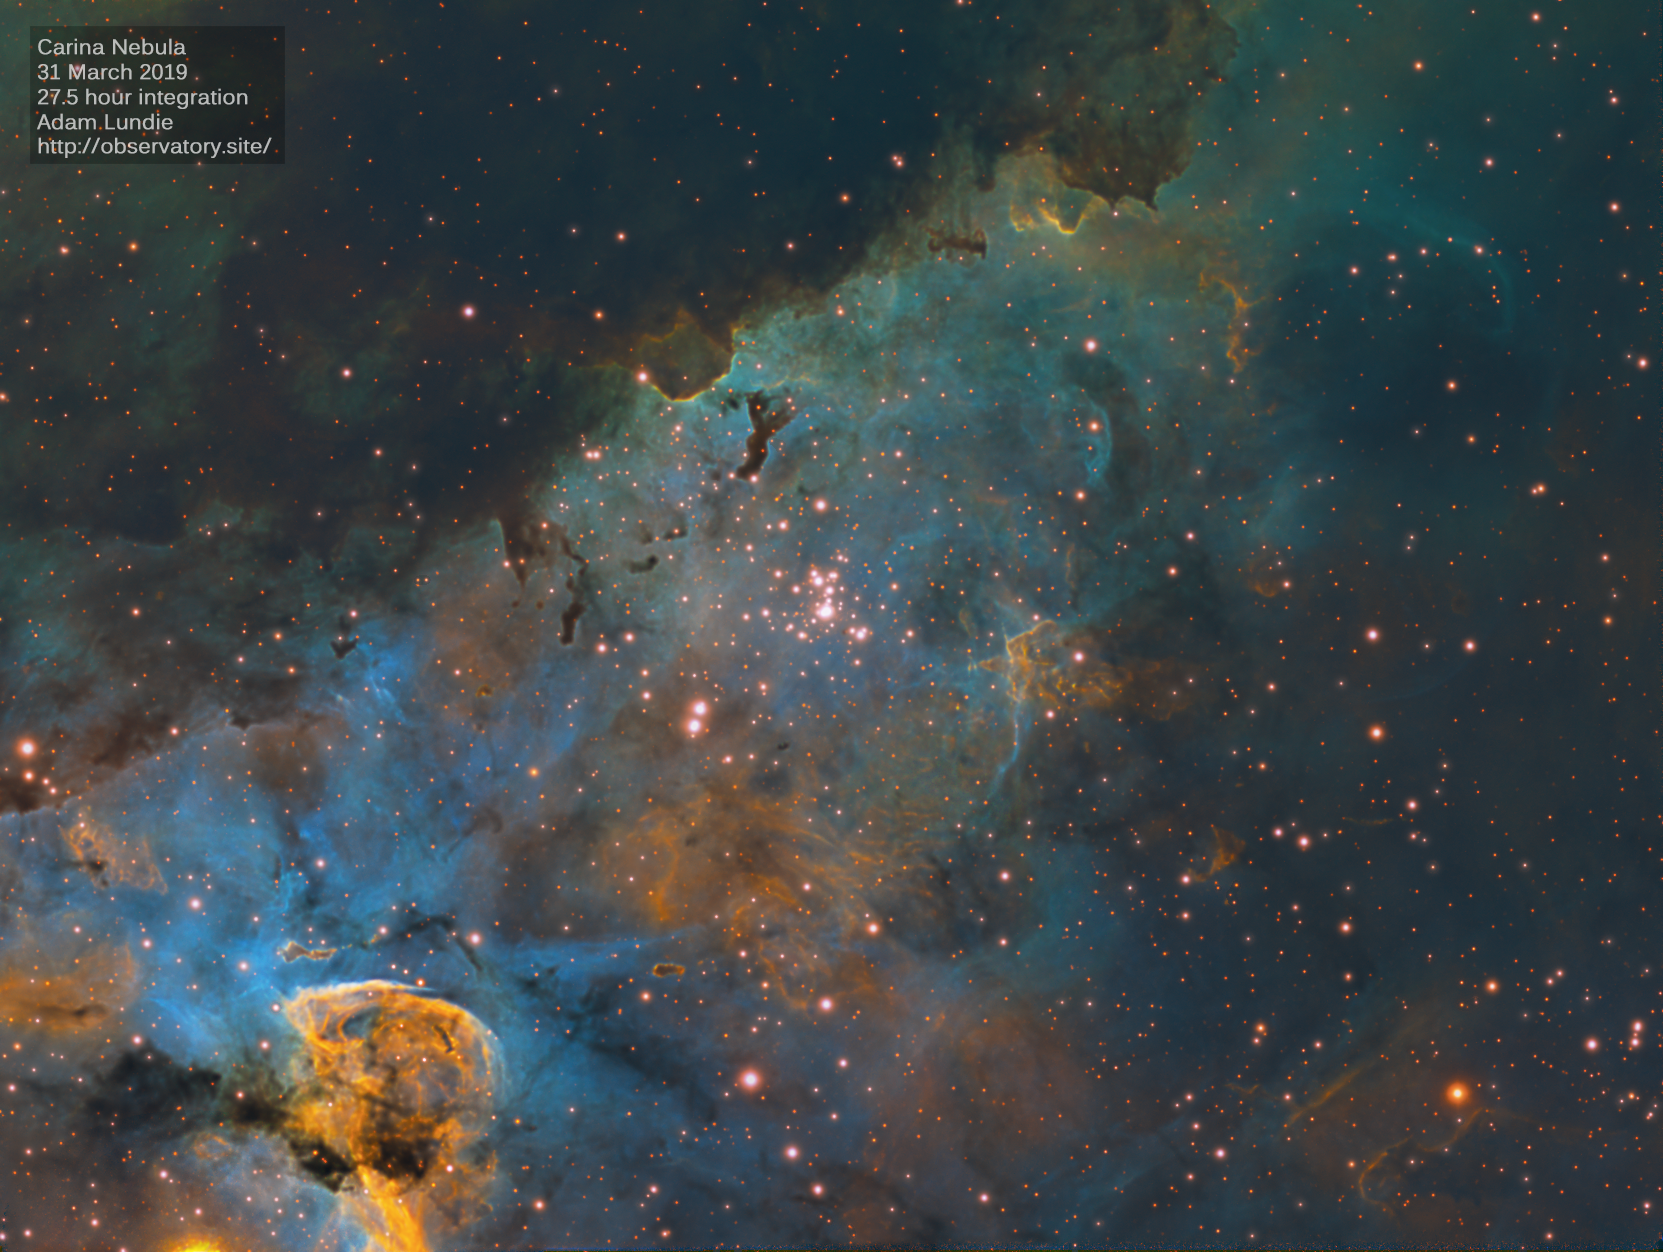 Carina Nebula Up Close